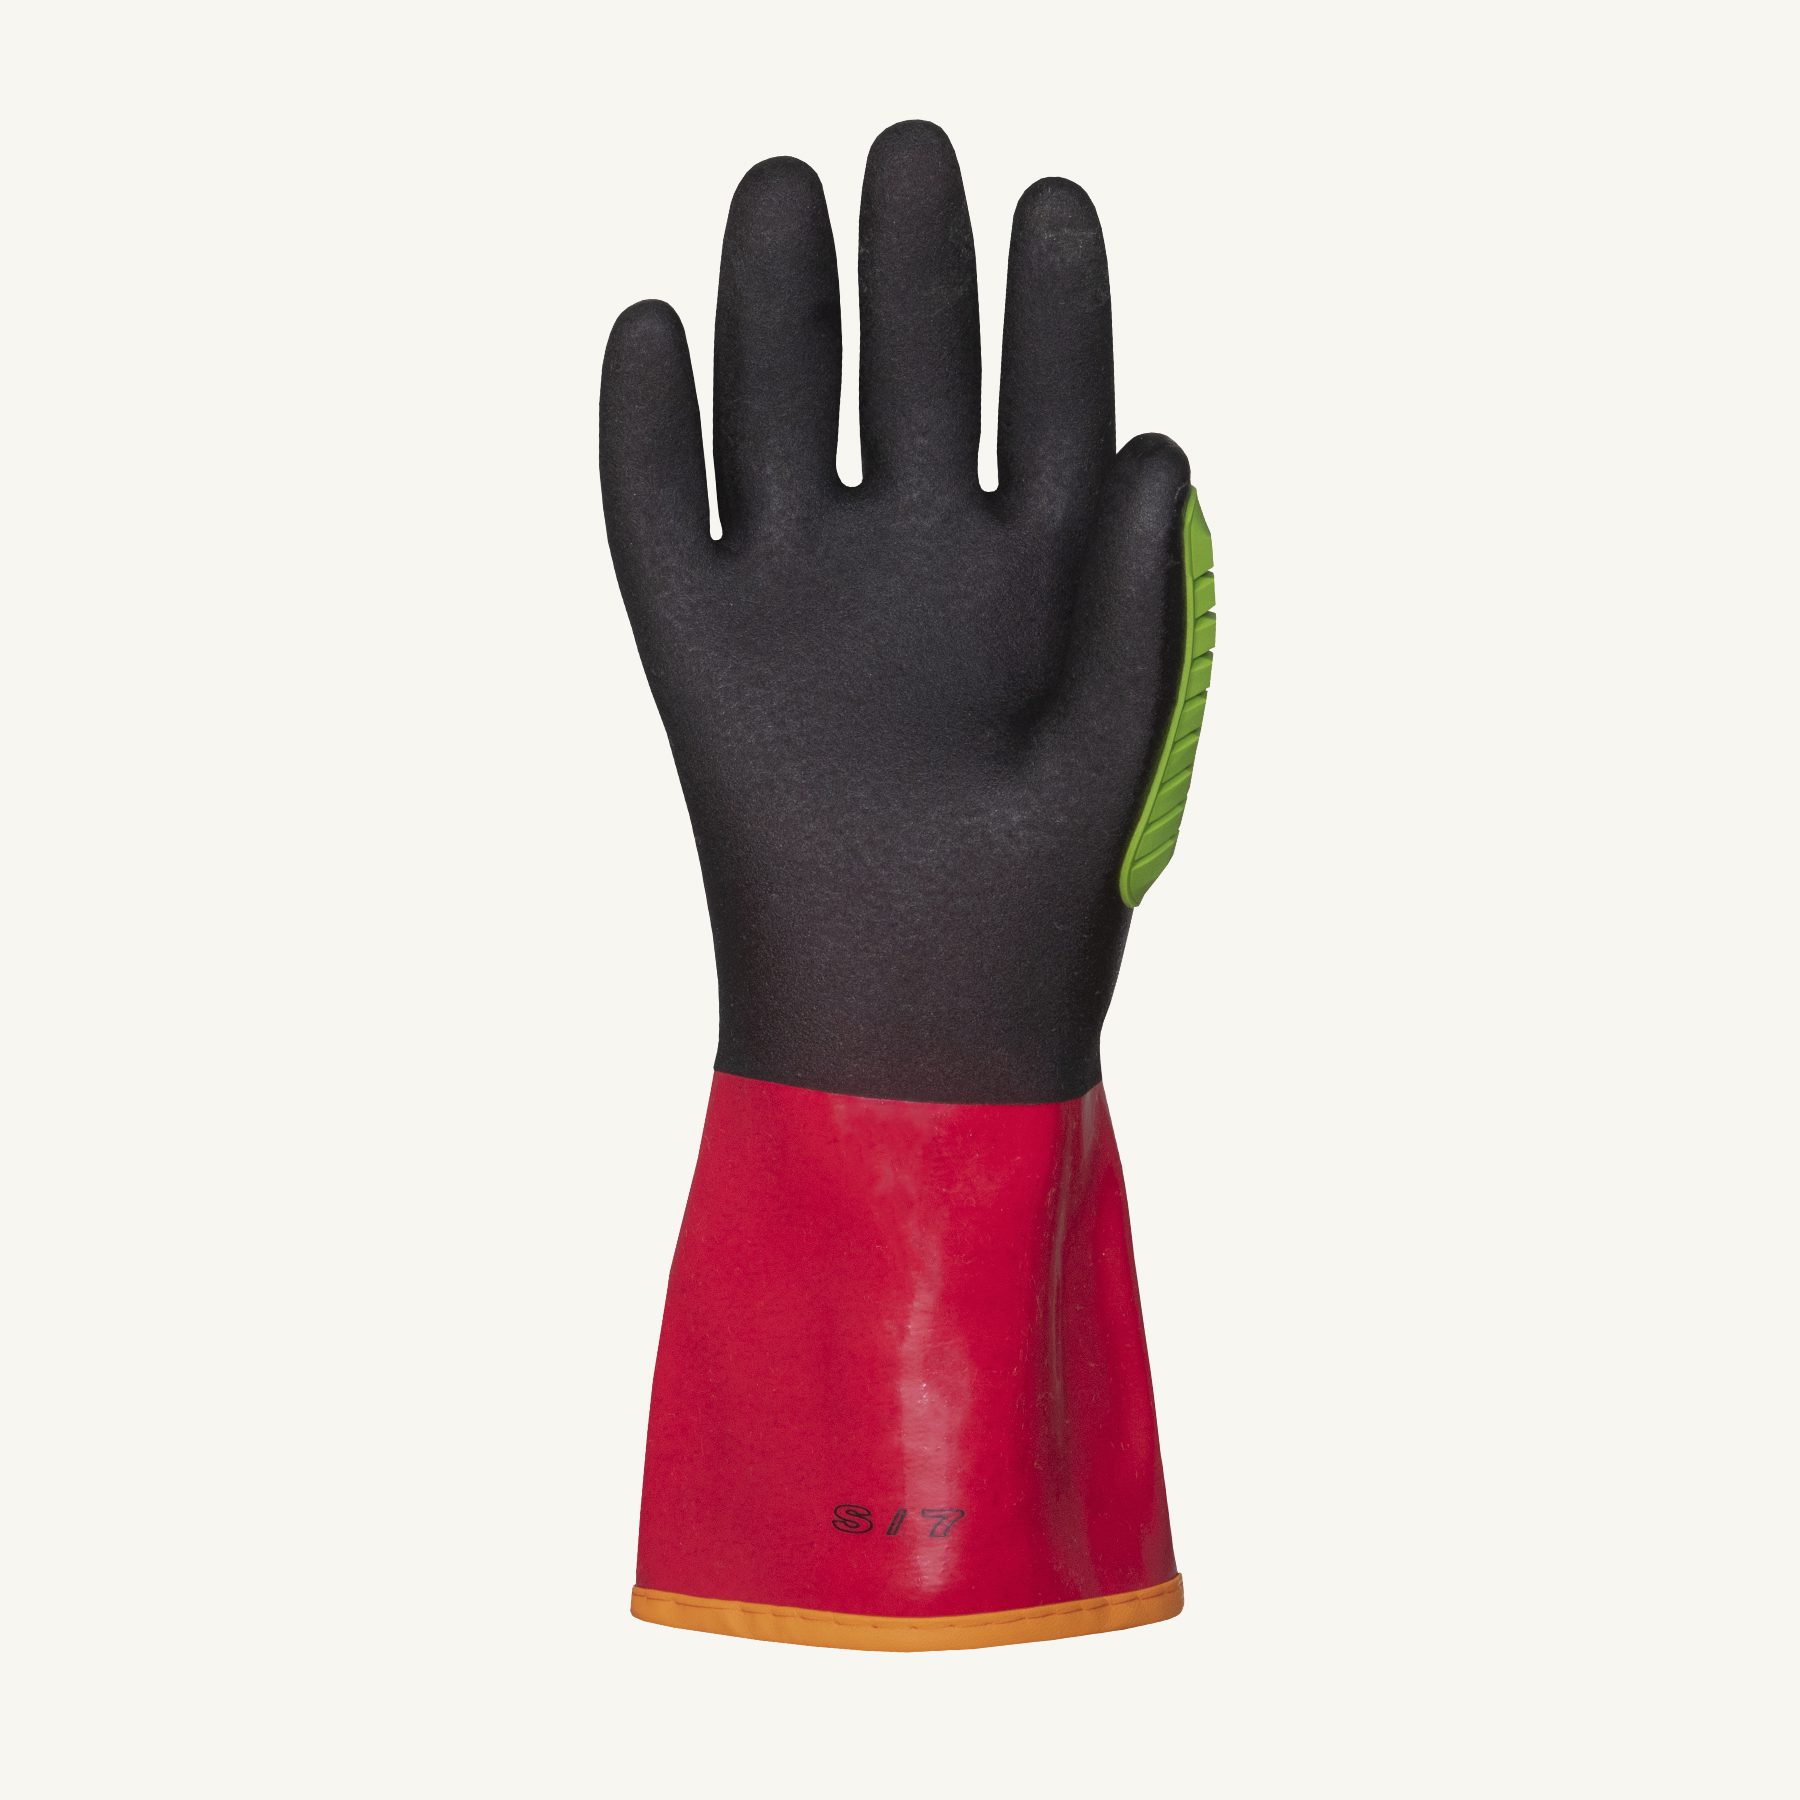 Superior Glove 378GOB Endura Glove, Grain Goatskin Drivers, Keystone Thumb, Unlined